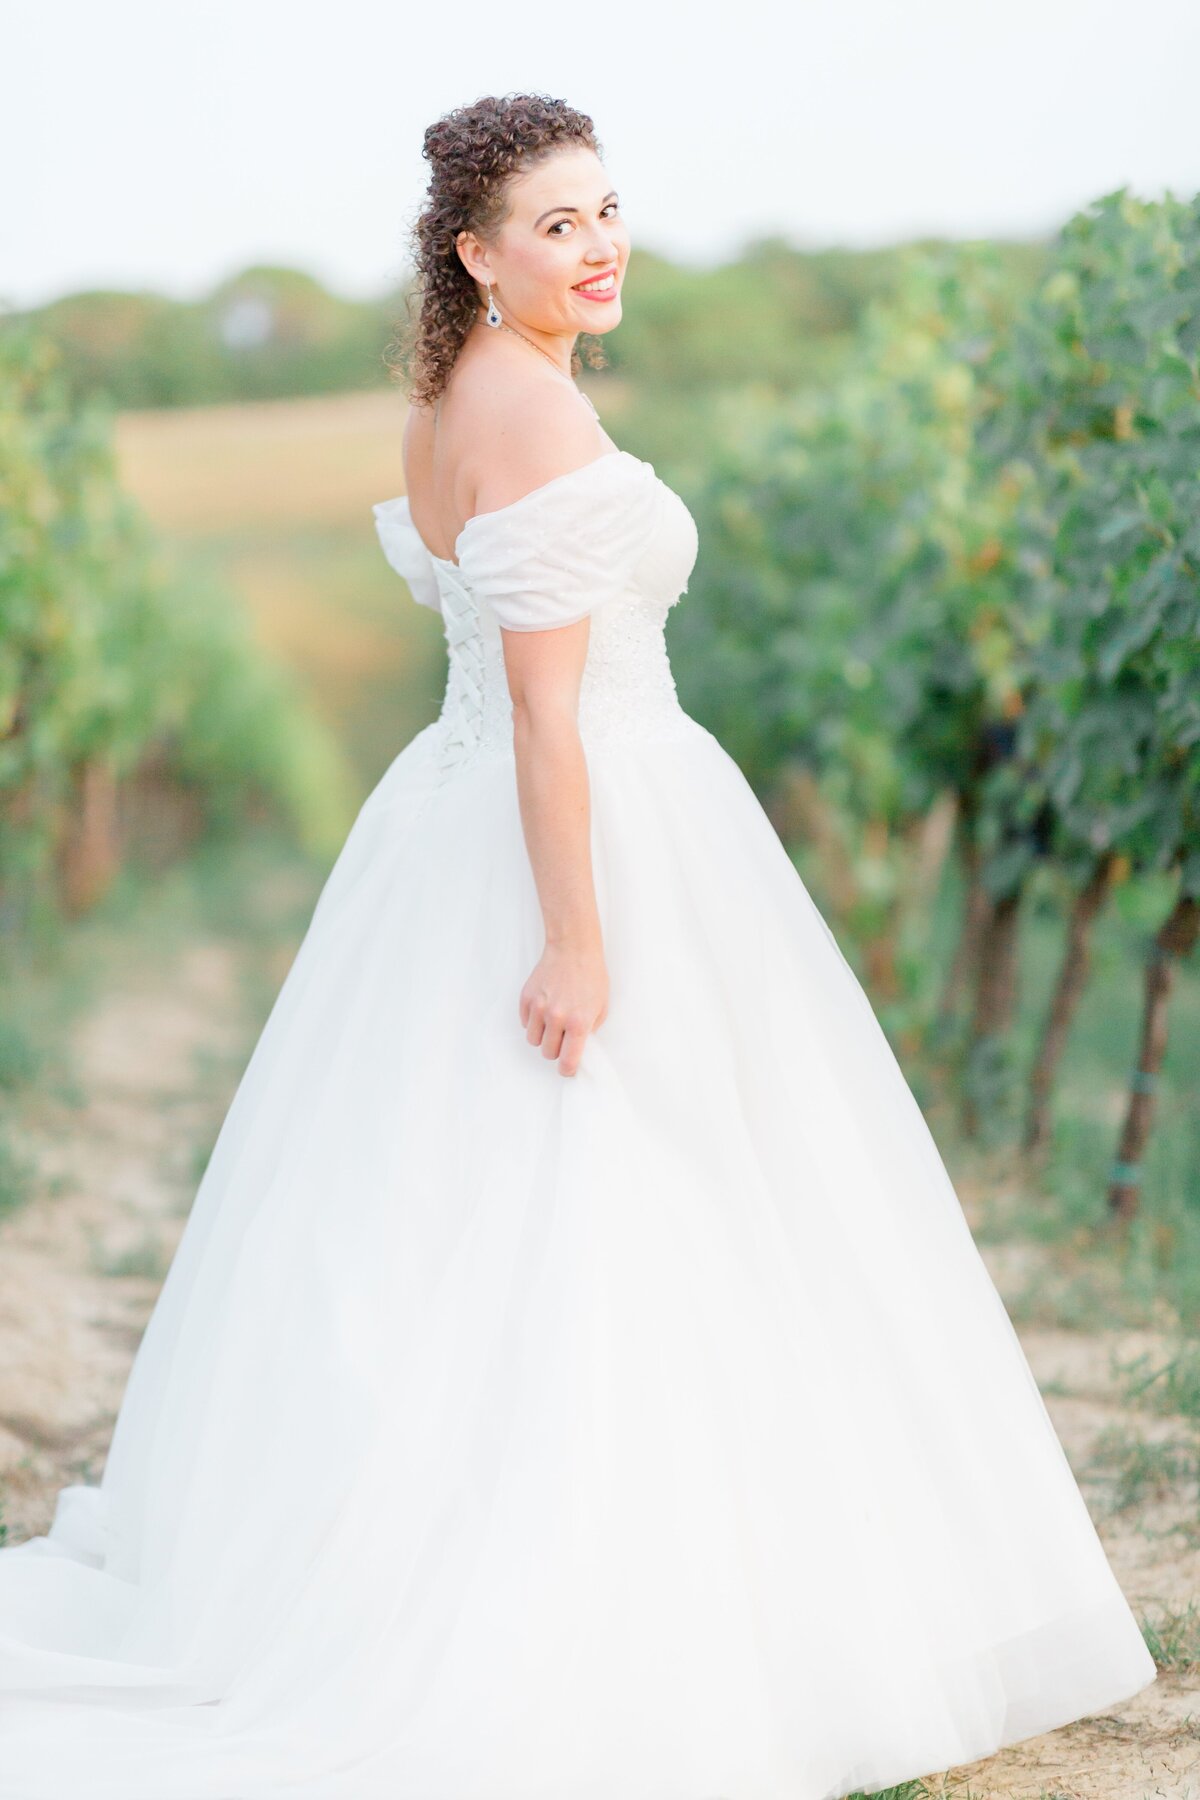 erica-lauren-photography-stacey-lance-tuscany-italy-wedding-sept-05-2020-301